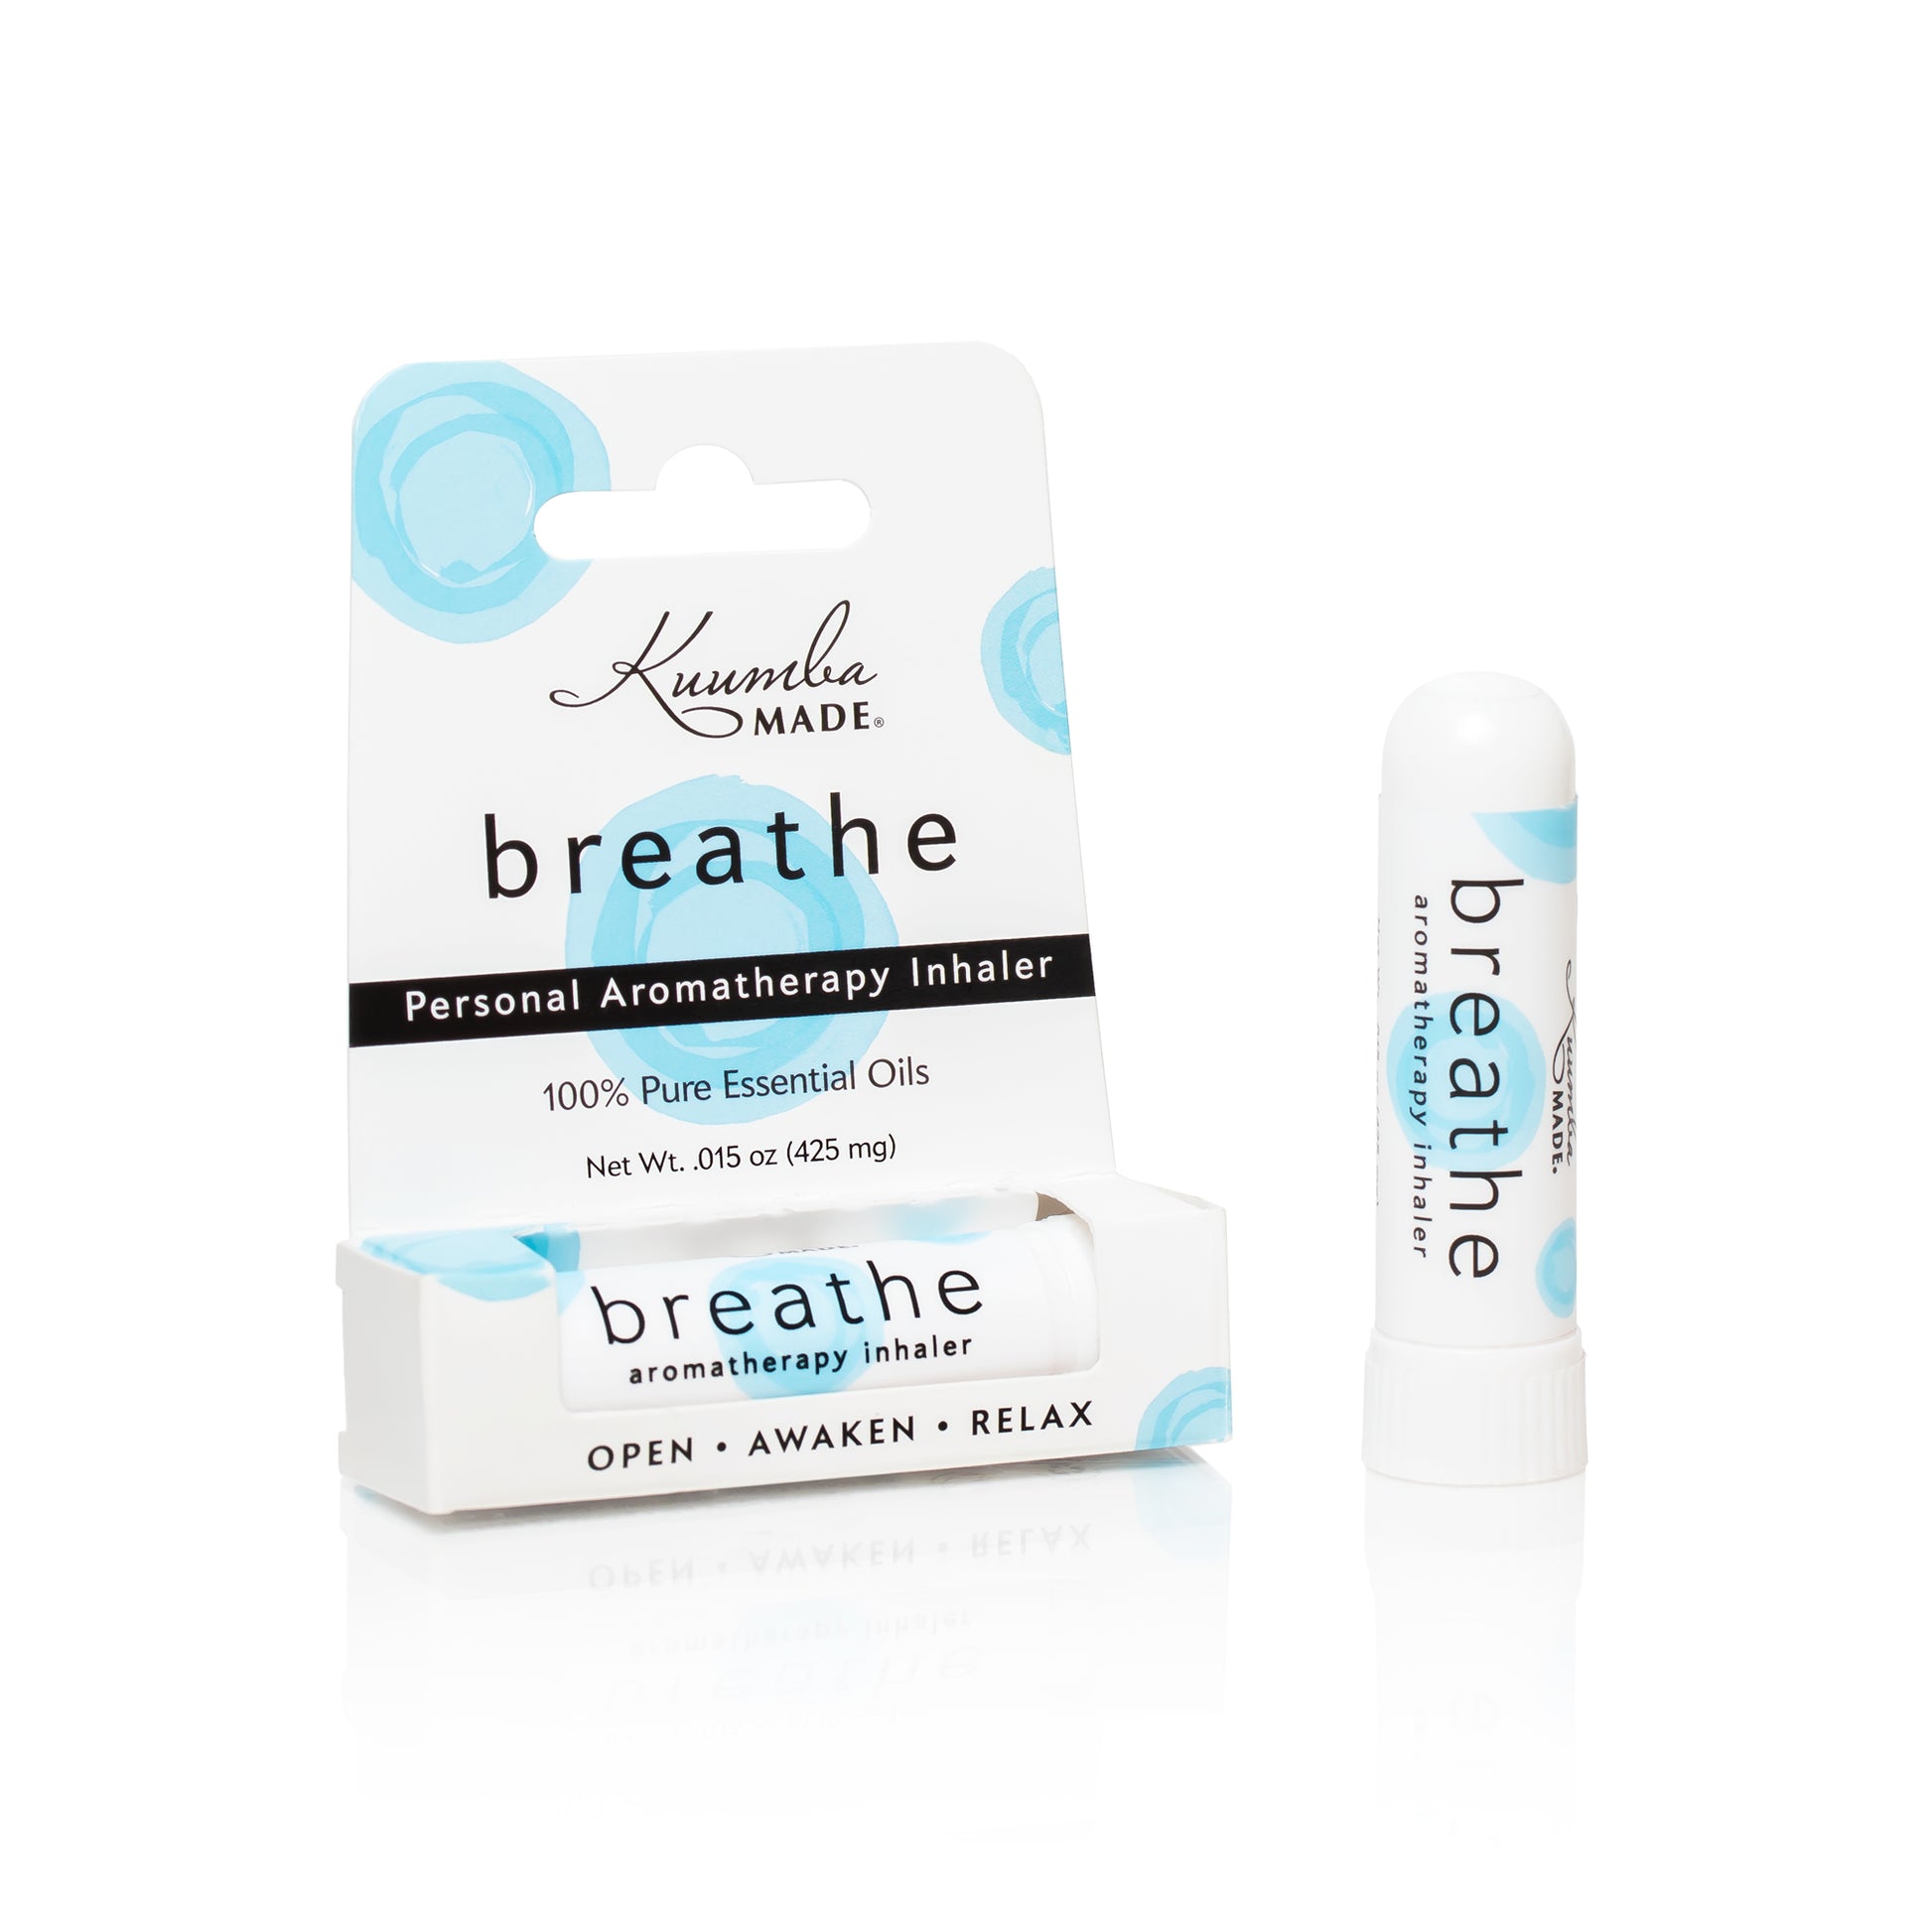 Breathe Personal Aromatherapy Inhaler from Kuumba Made